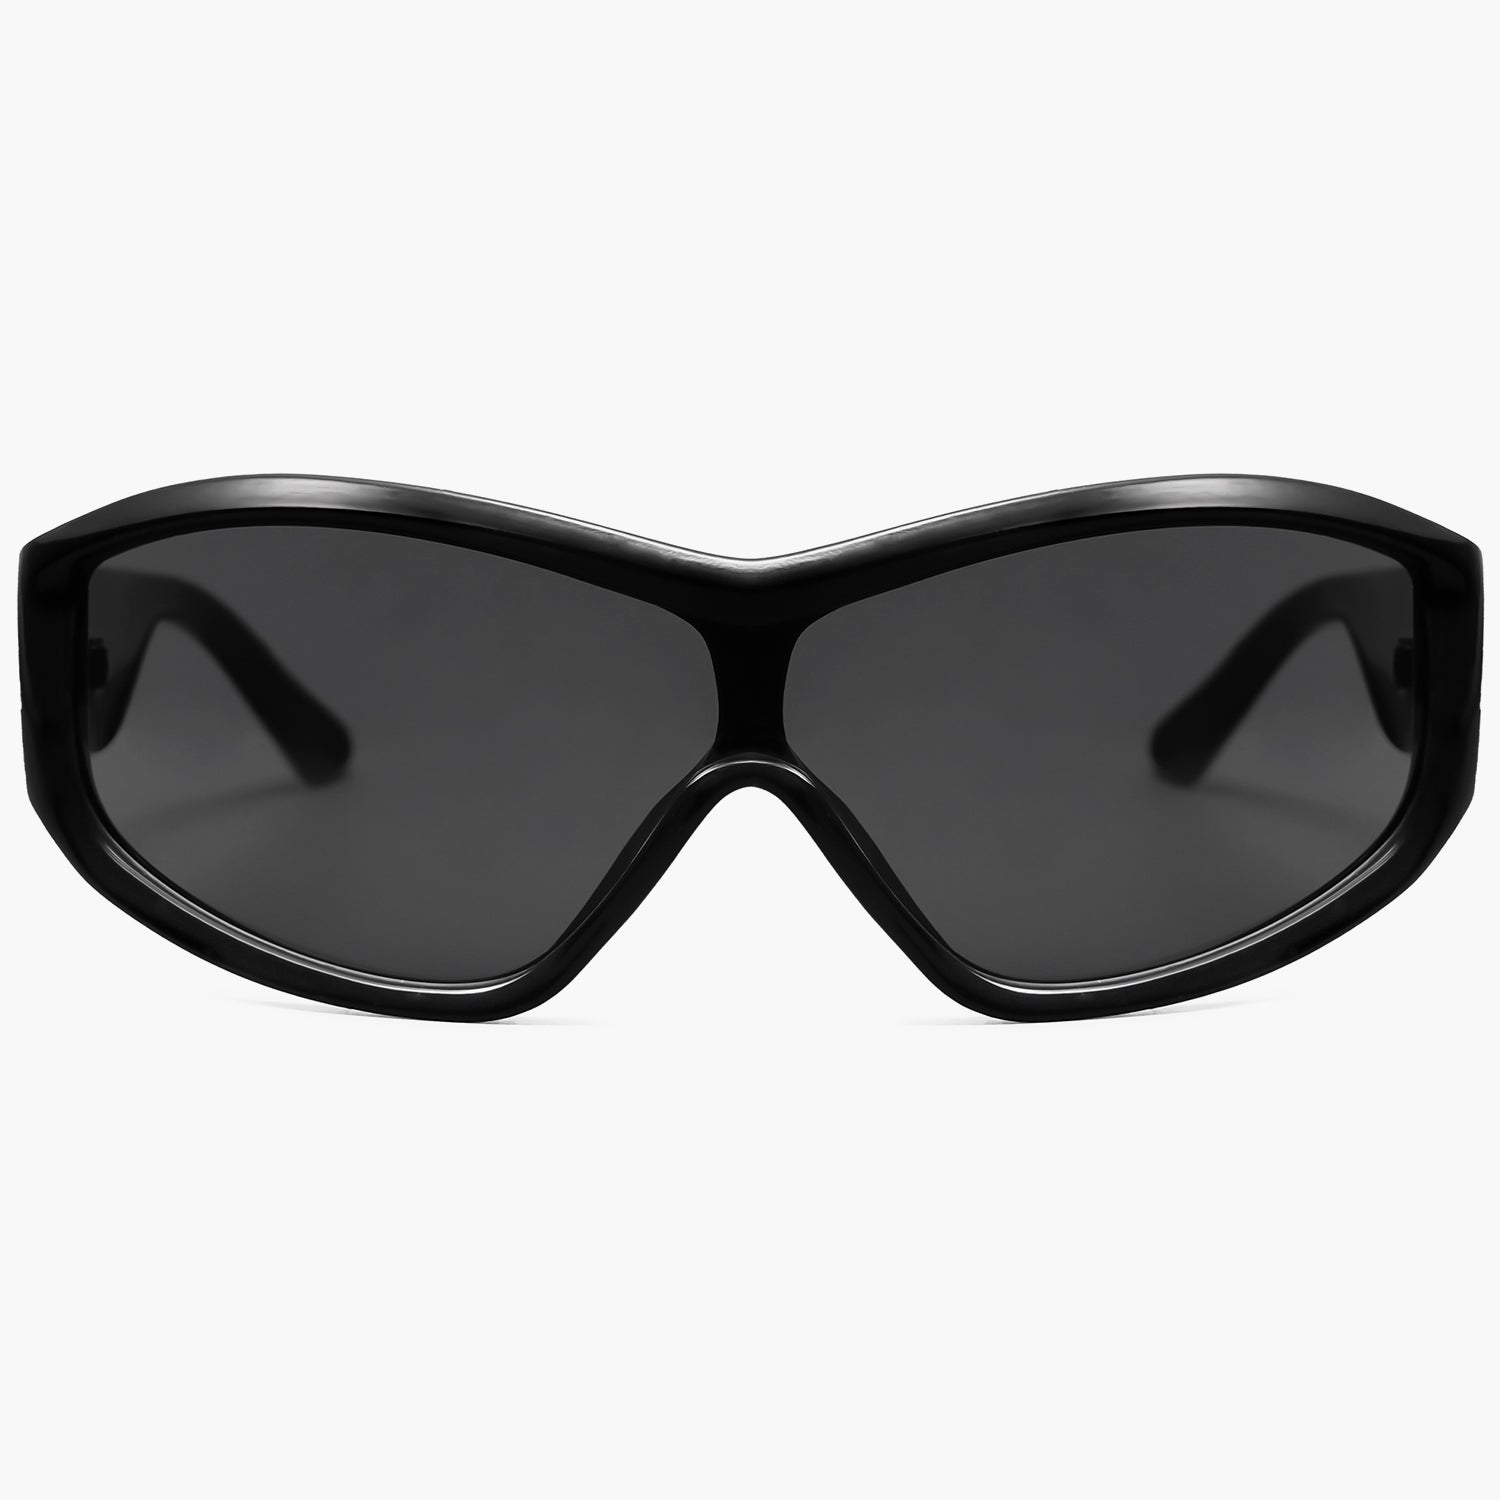 25 Best Amazon Sunglasses, From Under $20 To Designer